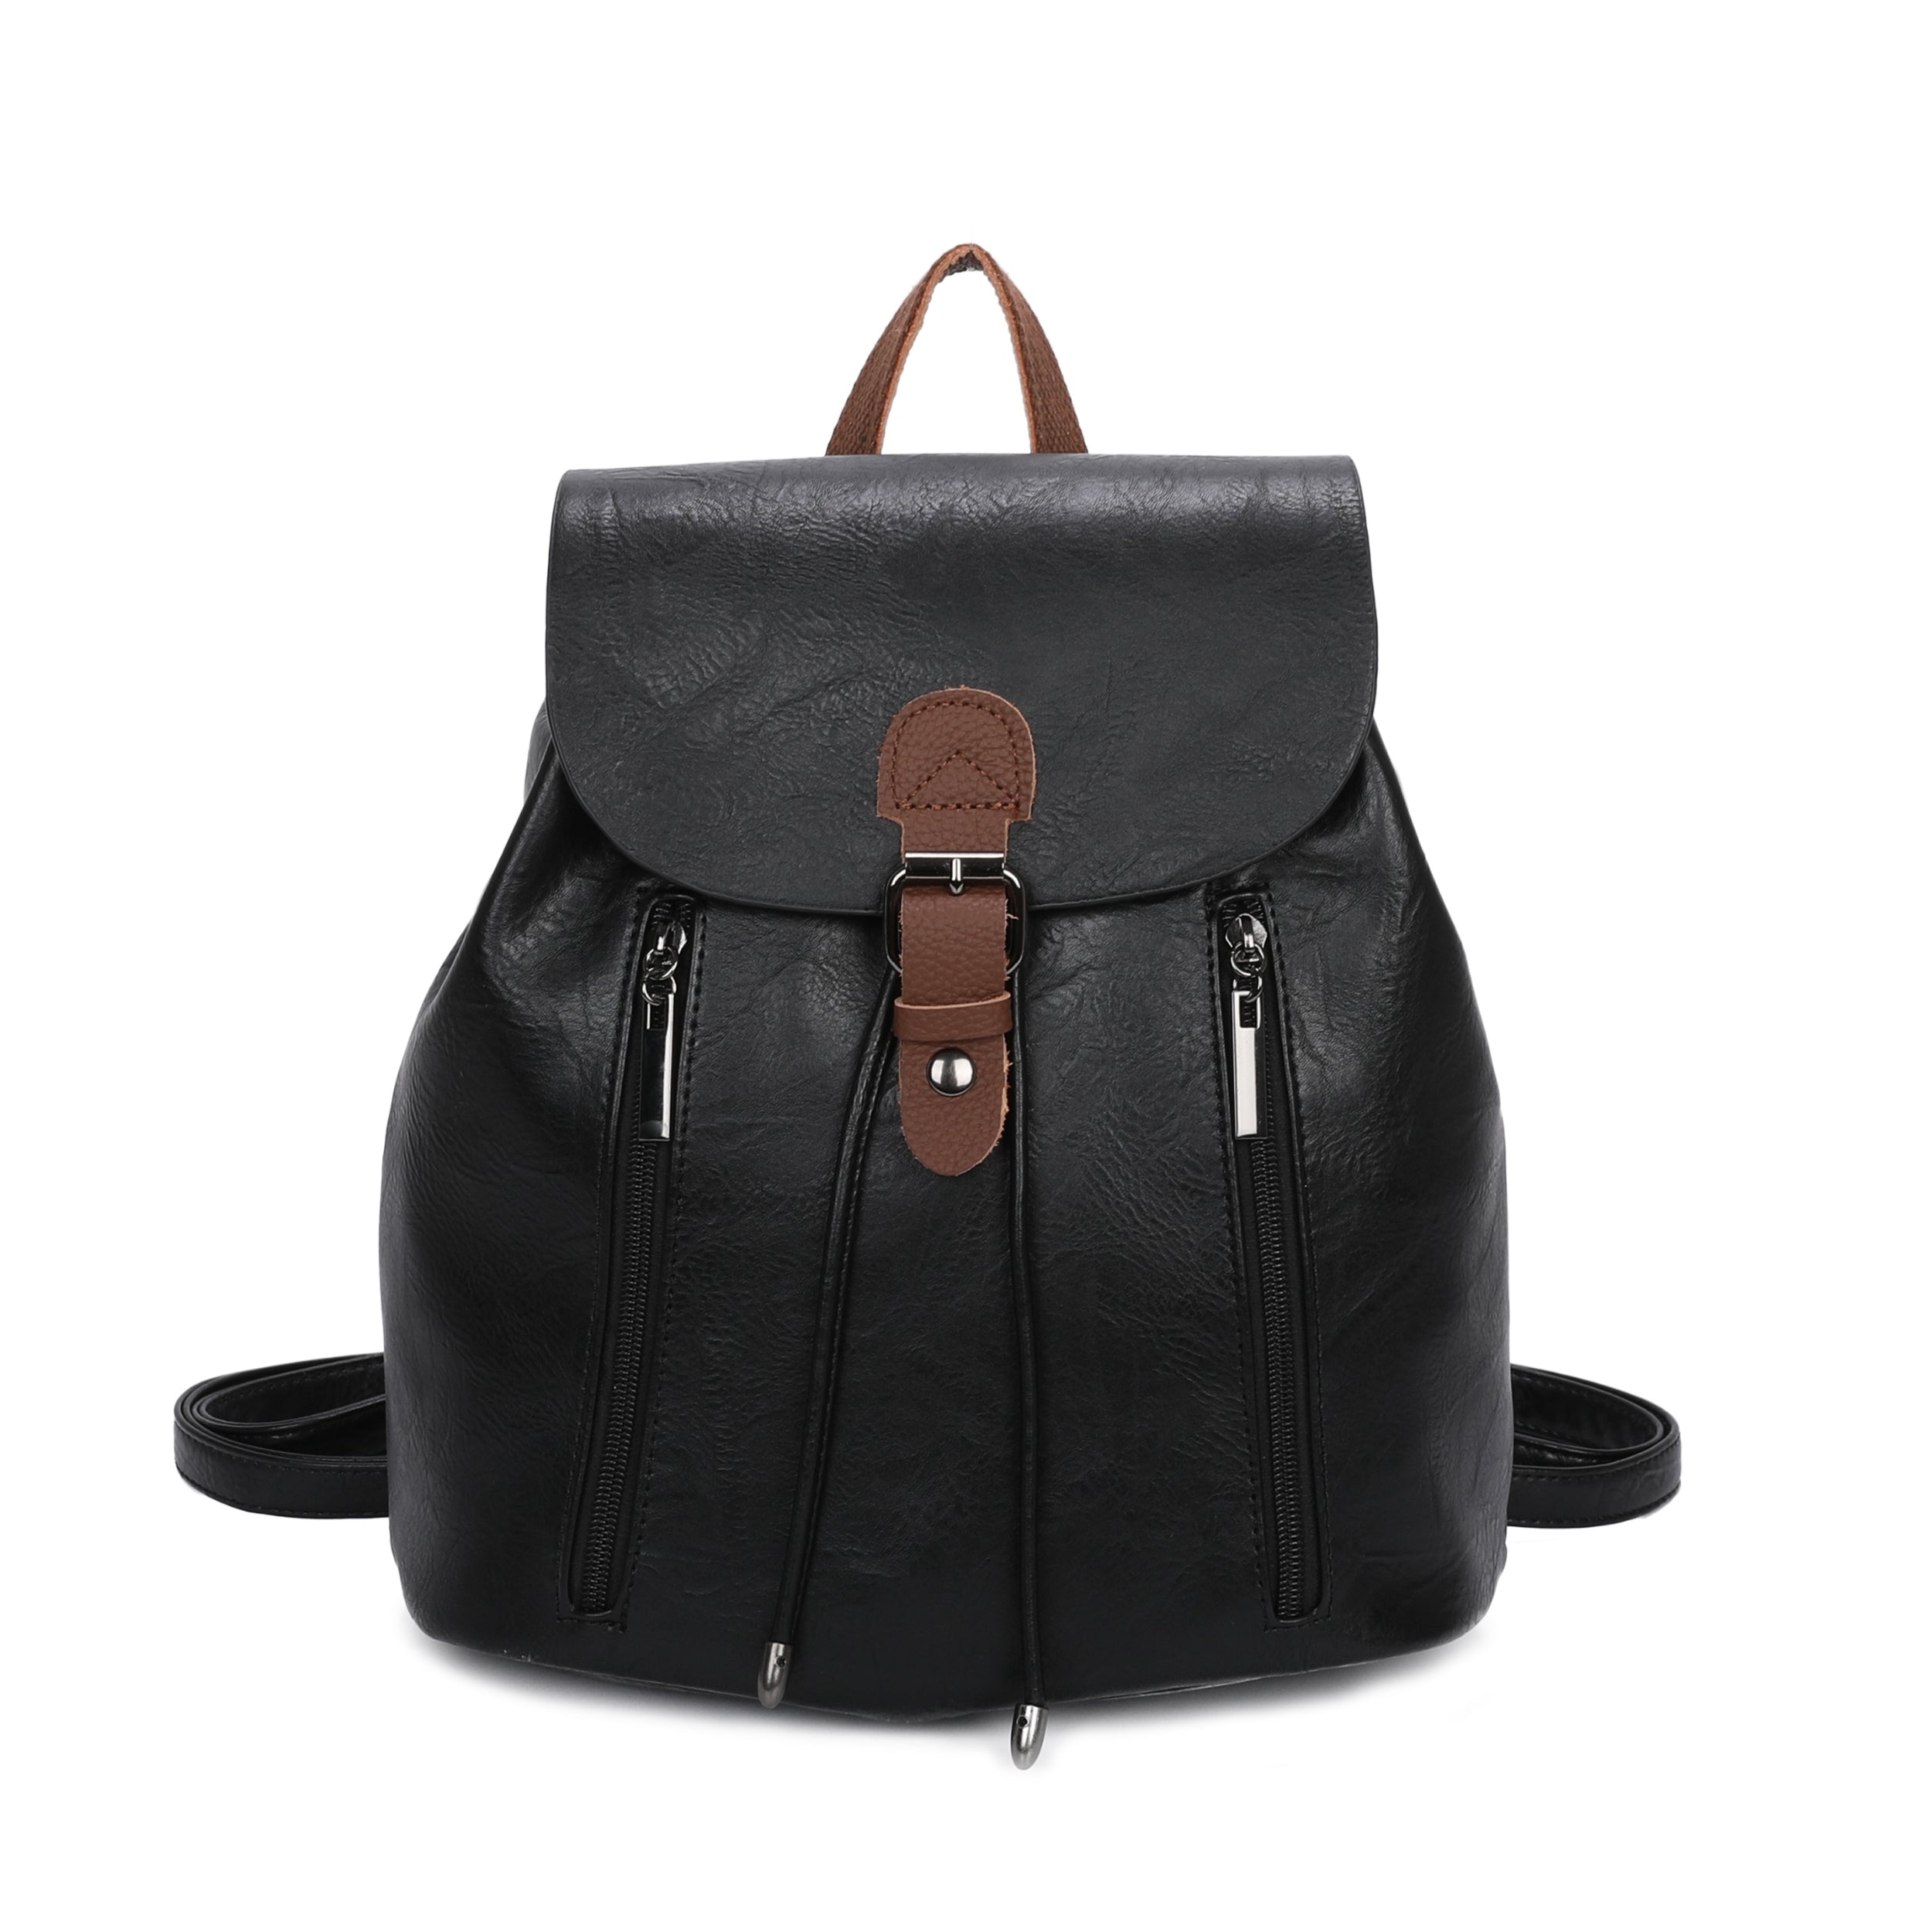 Craze London Leather Trim Backpack